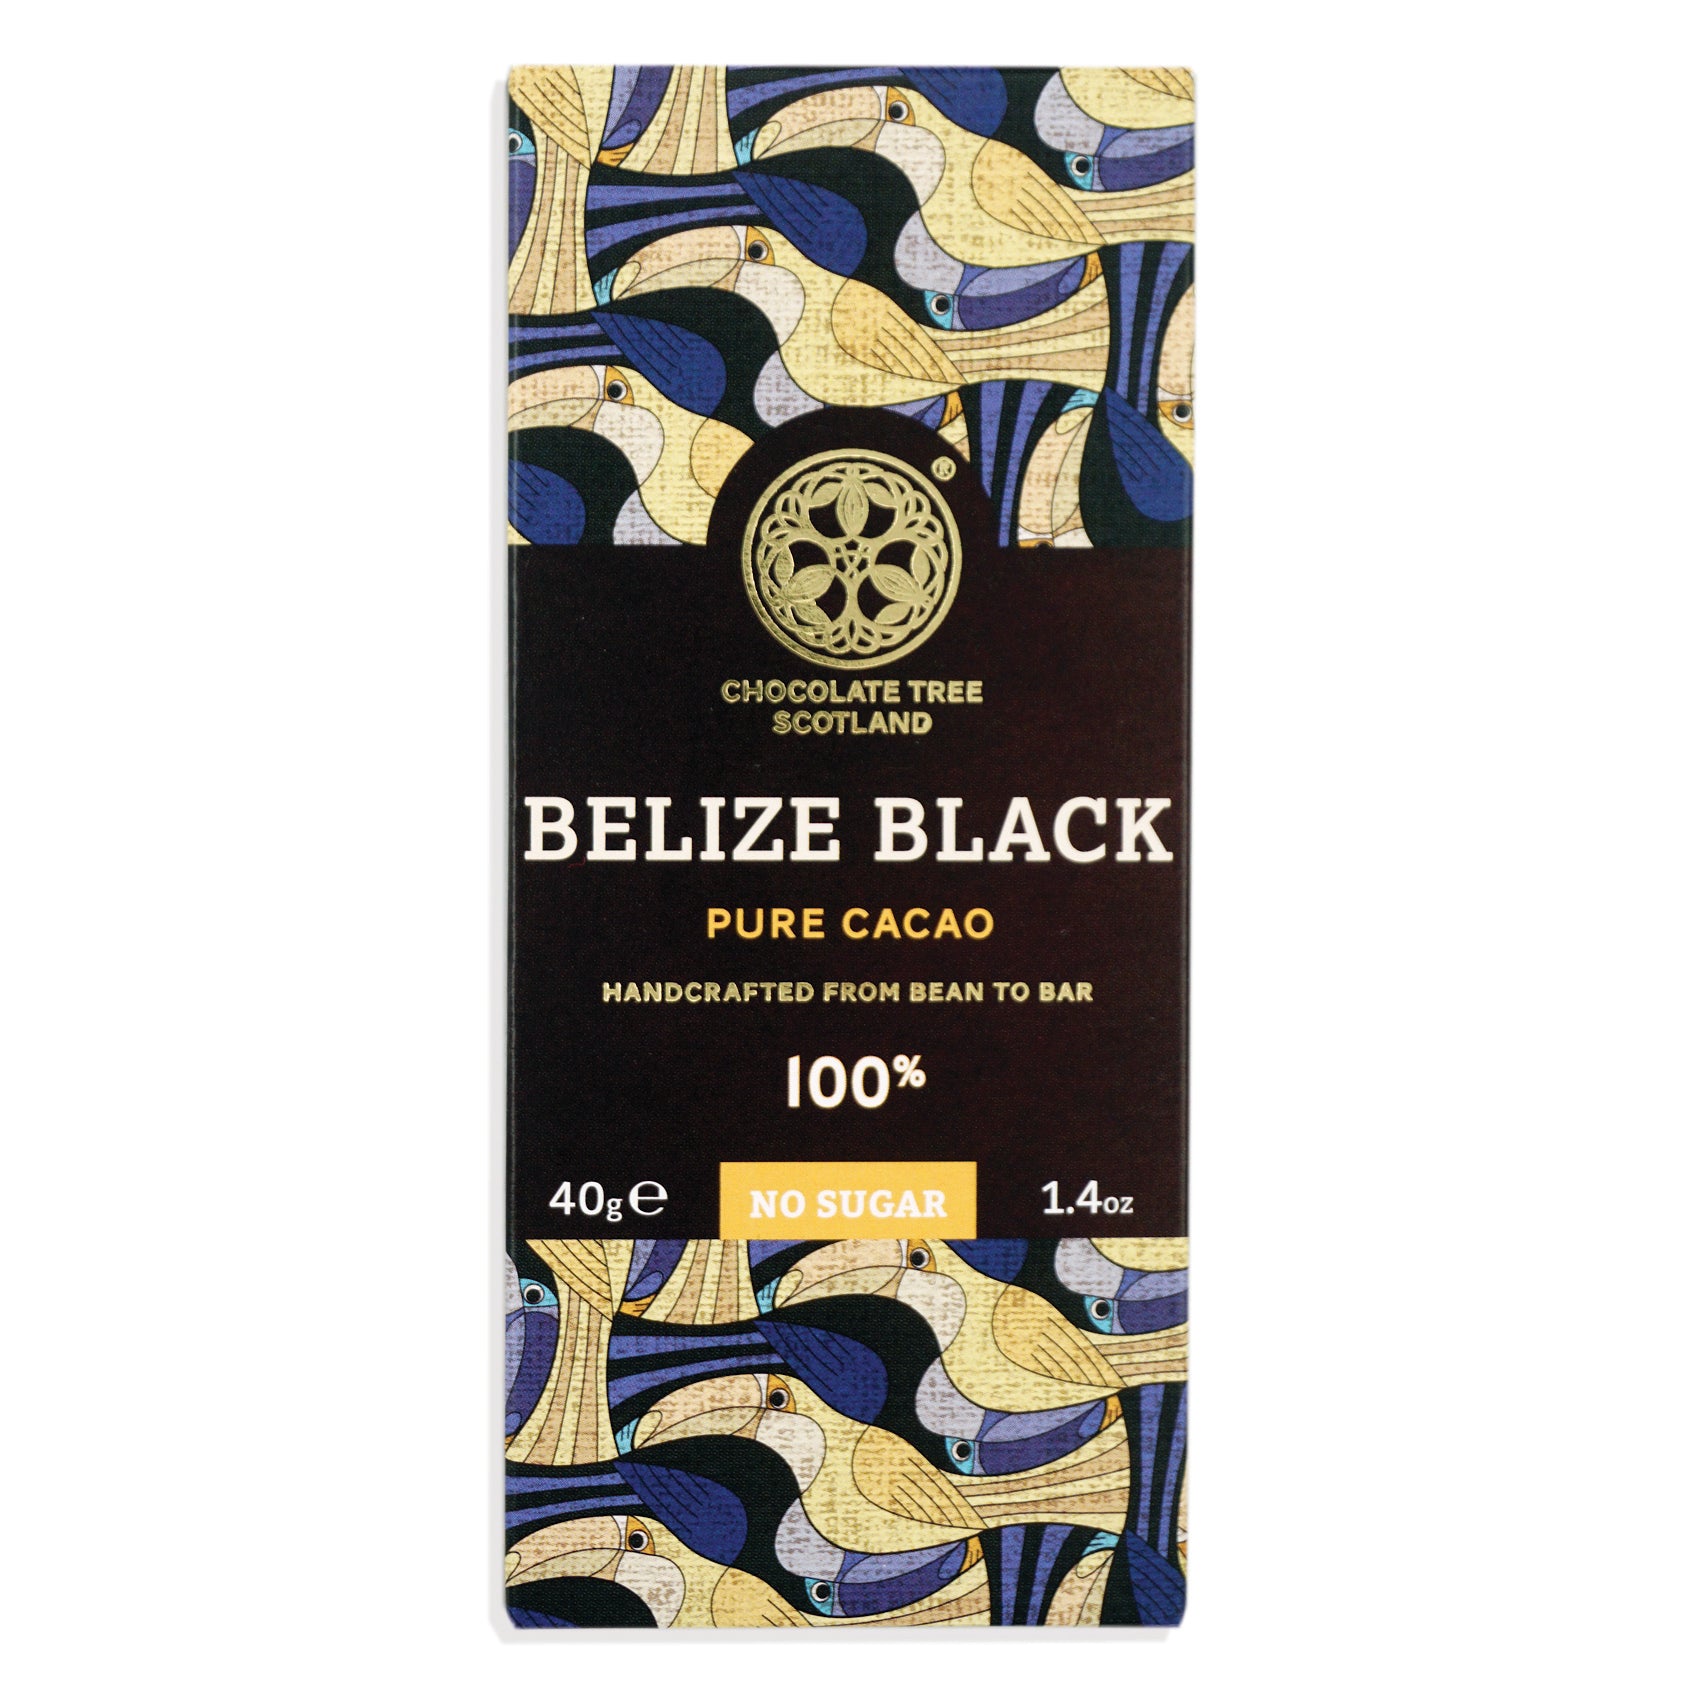 A bar of Chocolate Tree Belize 100% pure dark chocolate